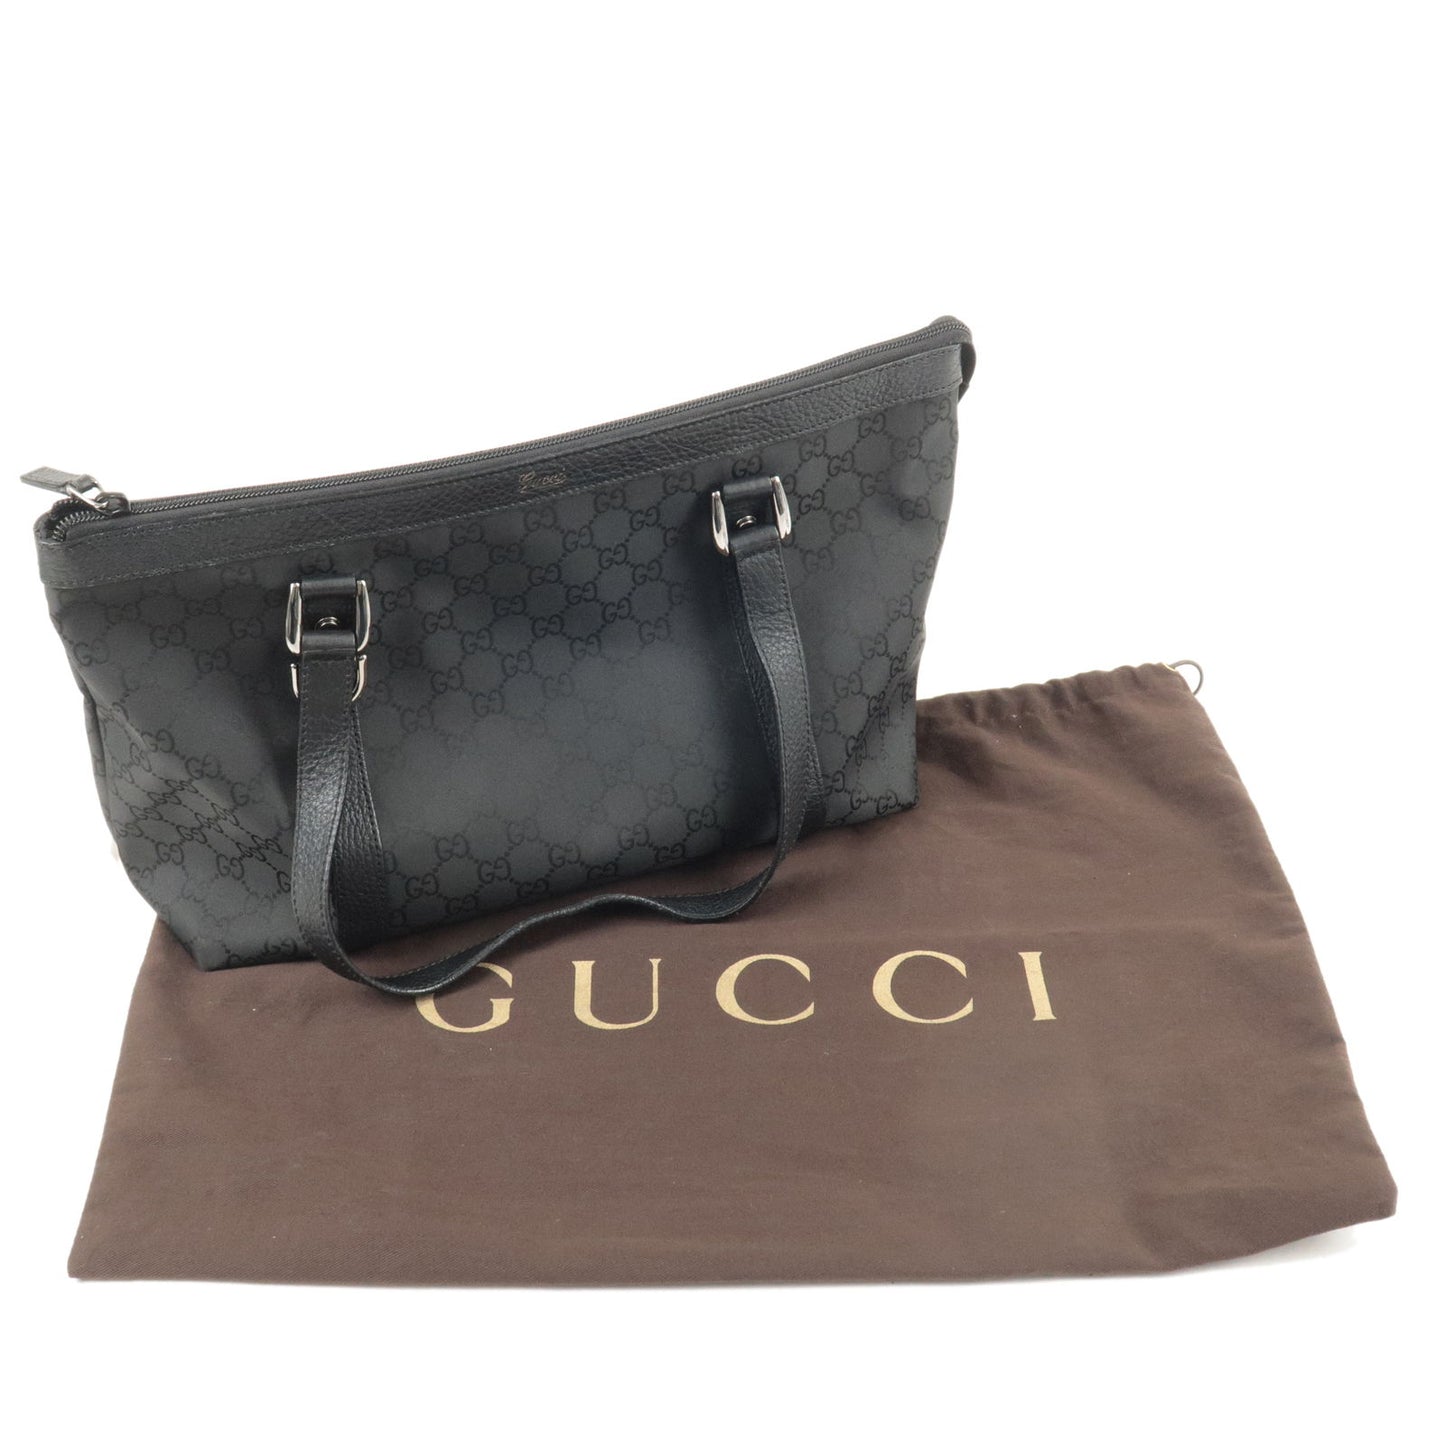 GUCCI GG Nylon Leather Tote Bag Hand Bag Black 268640